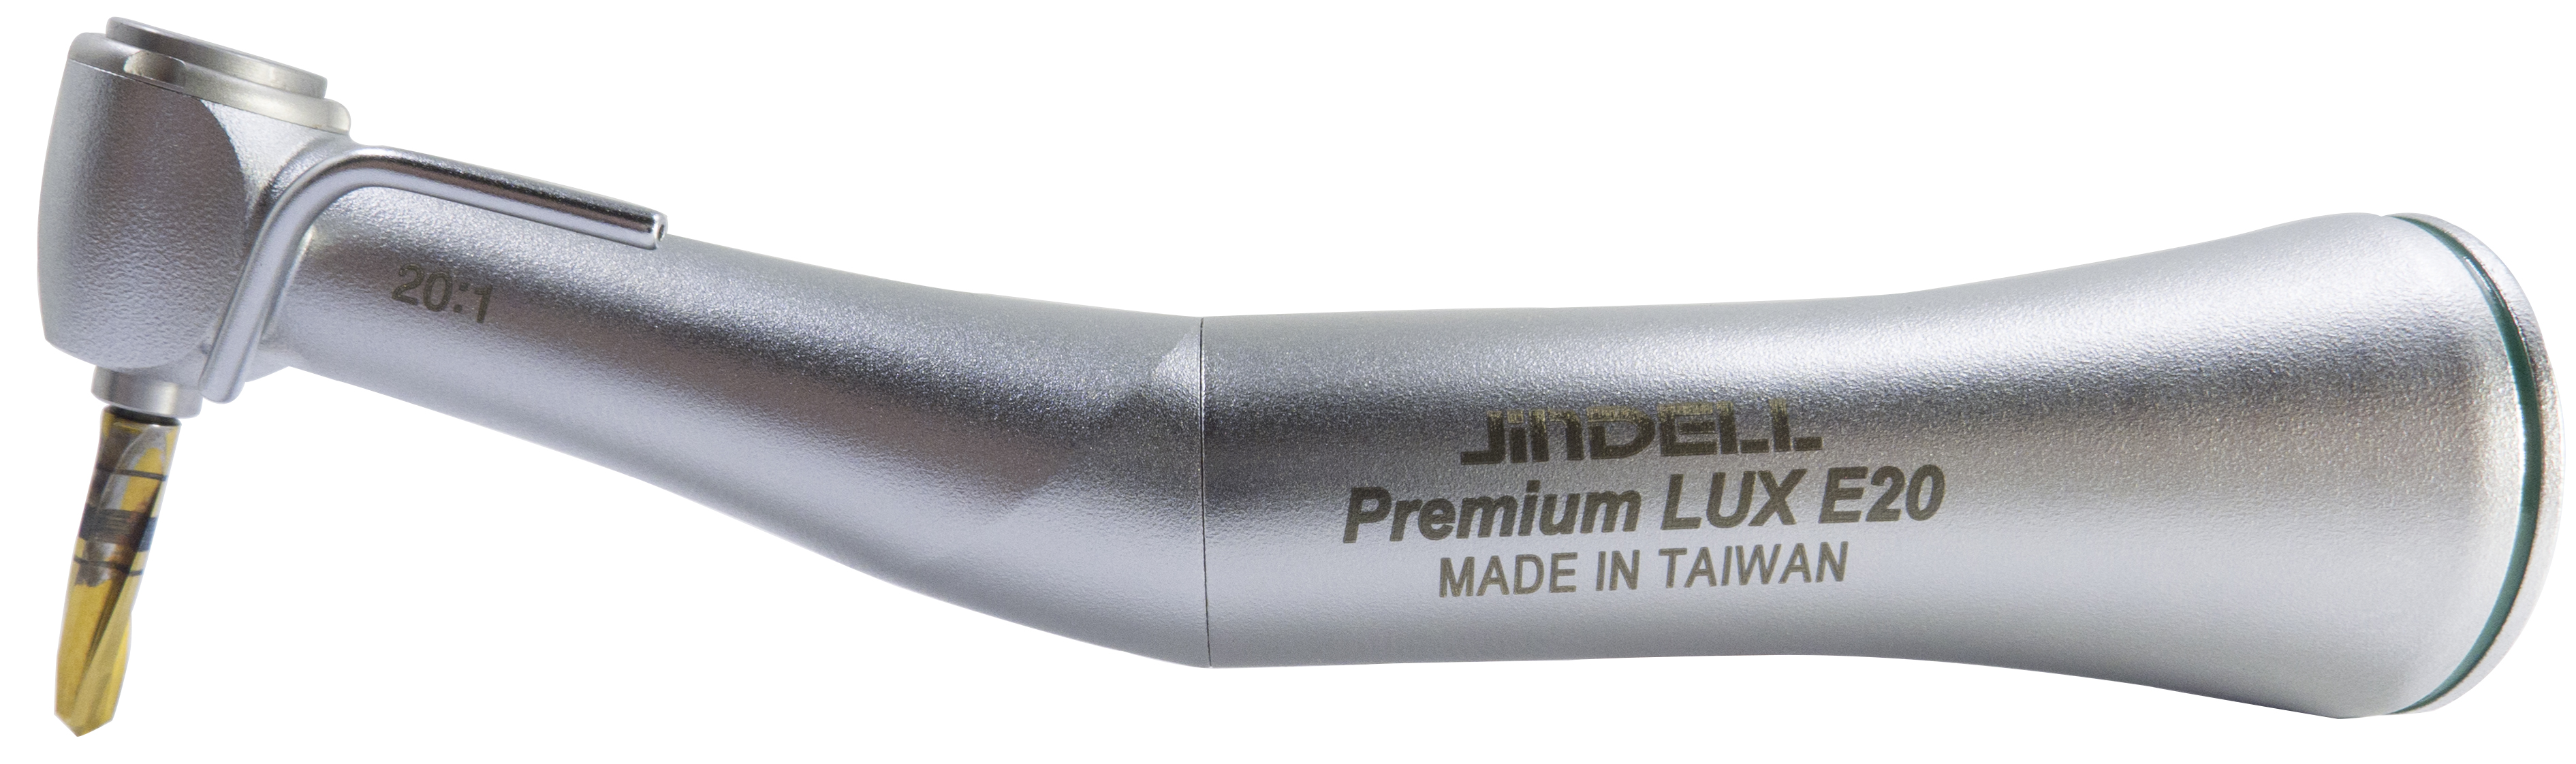 Premium LUX E20 非光纖植牙減速彎機